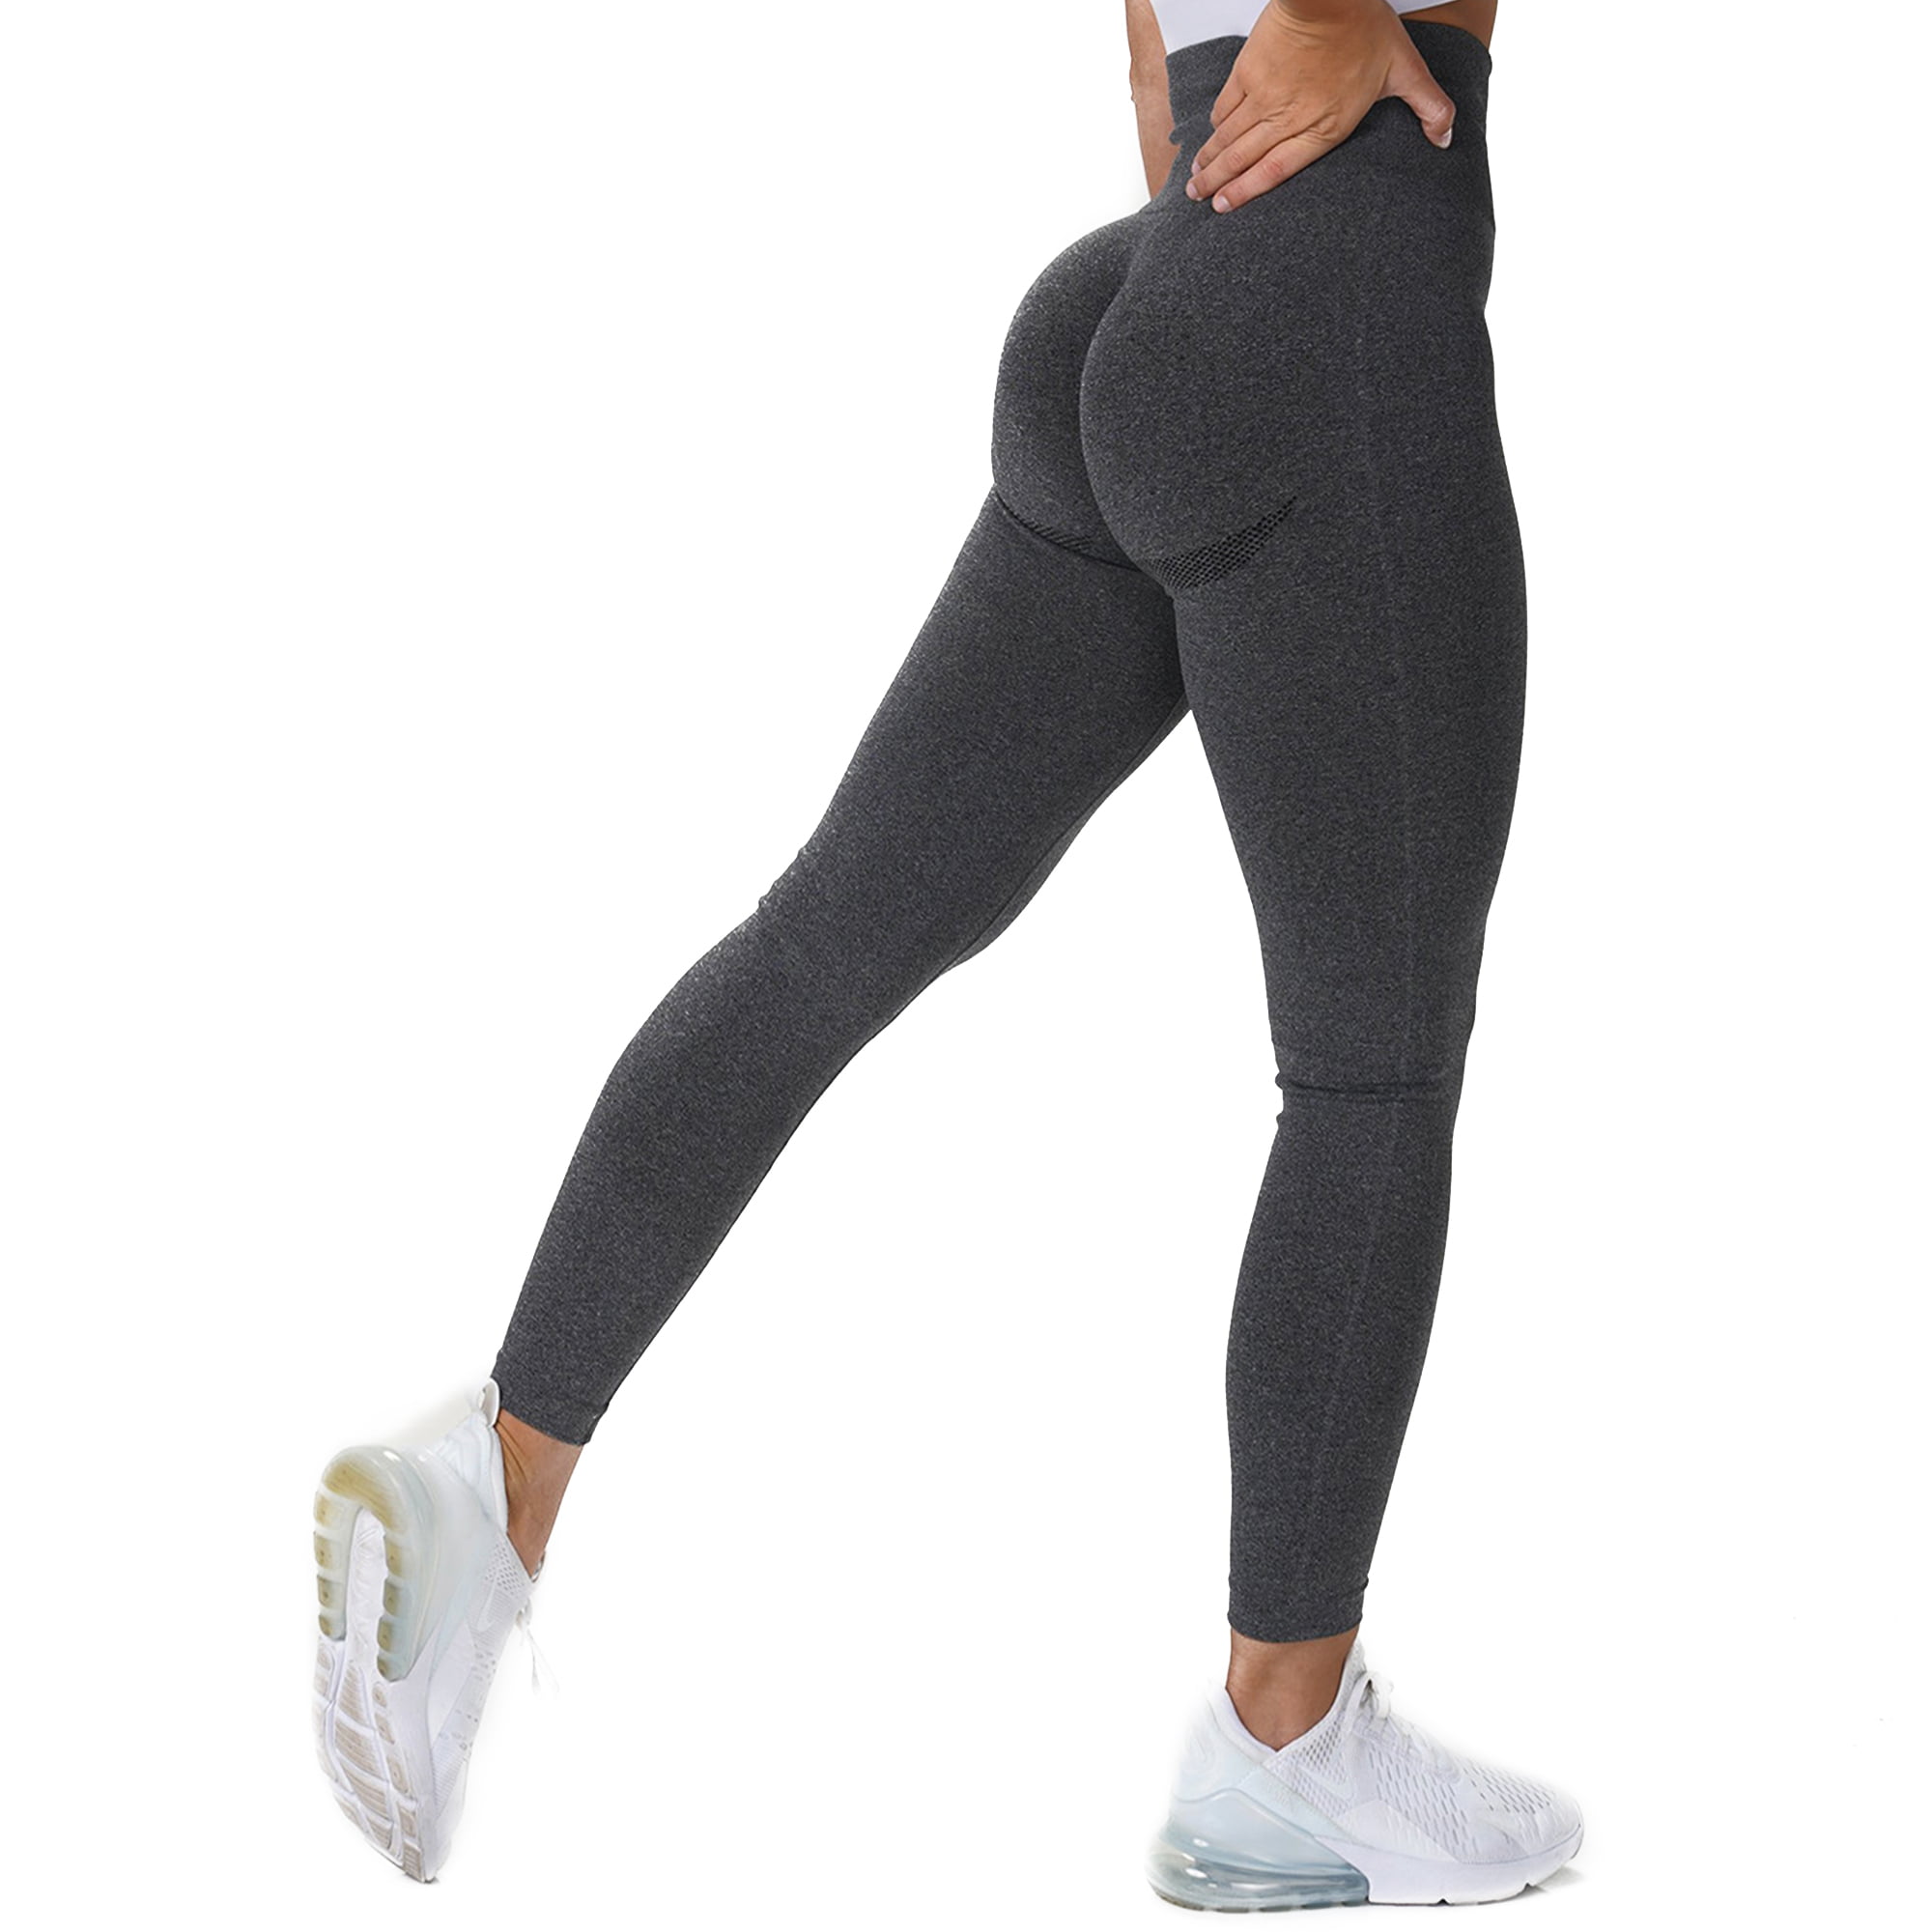 CROSS1946 Women High Waist Yoga Pants Gym Push Up Workout Fitness Leggings Sport 